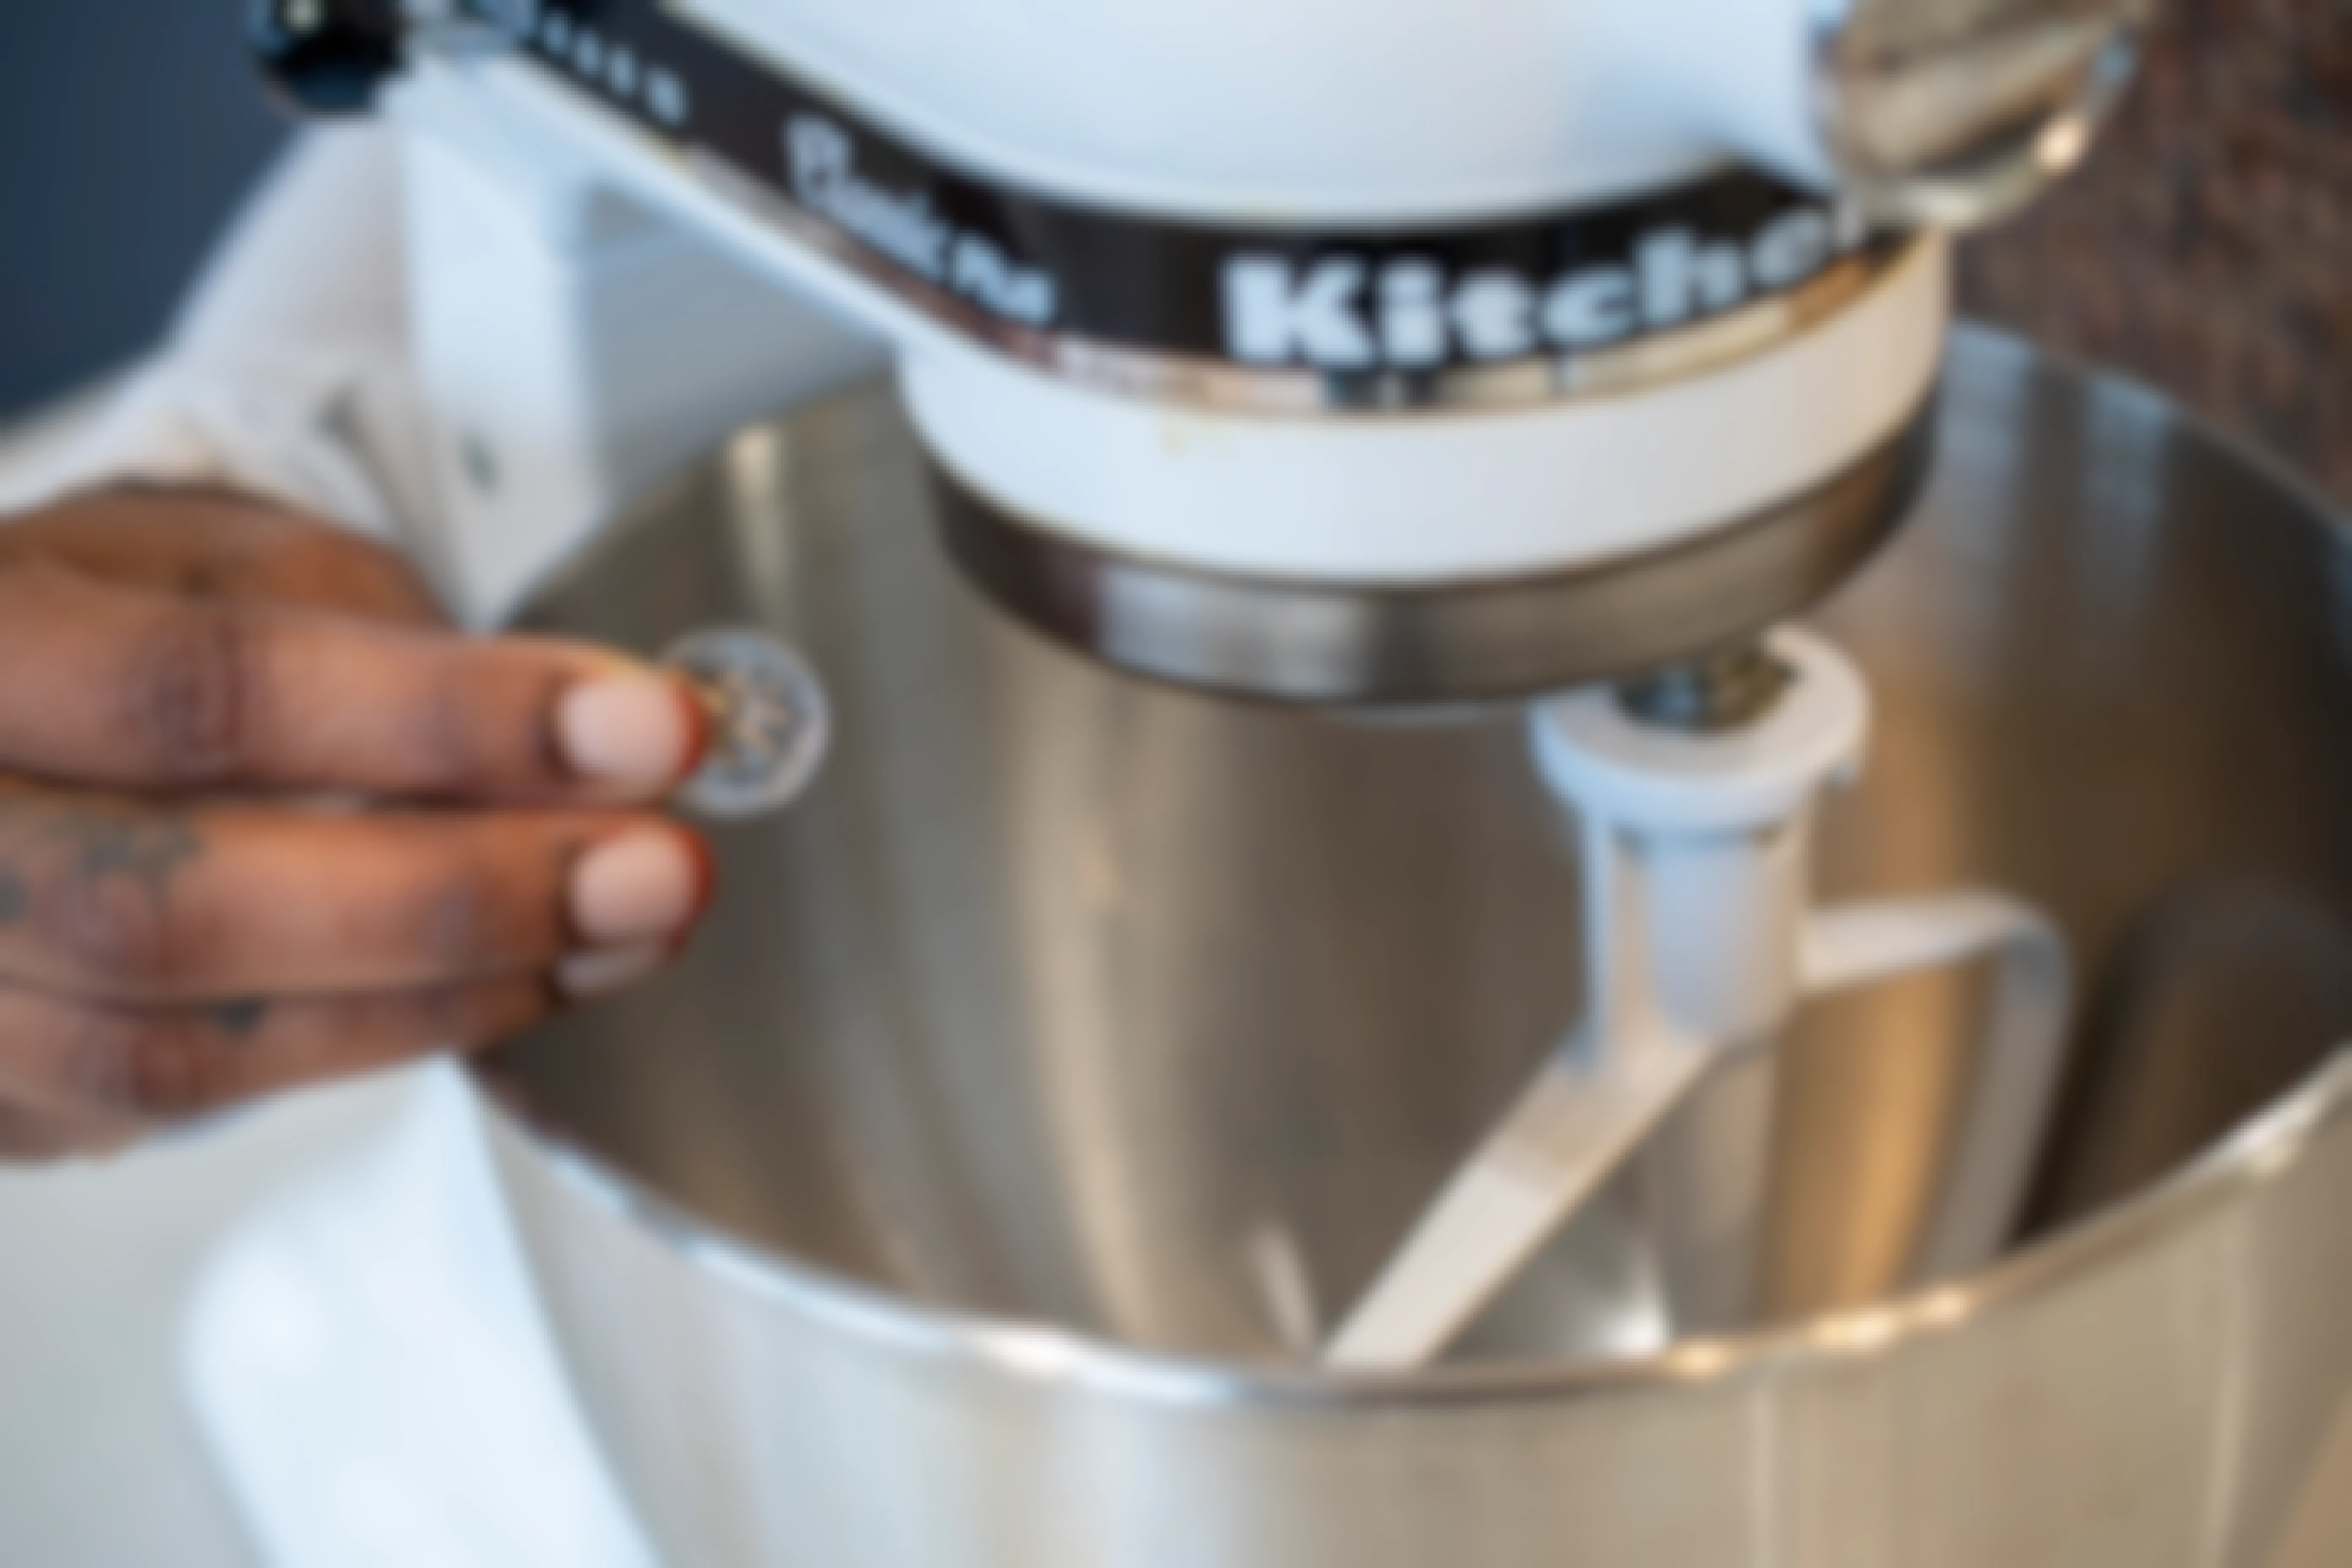 A person holding a dime next to a KitchenAid mixer